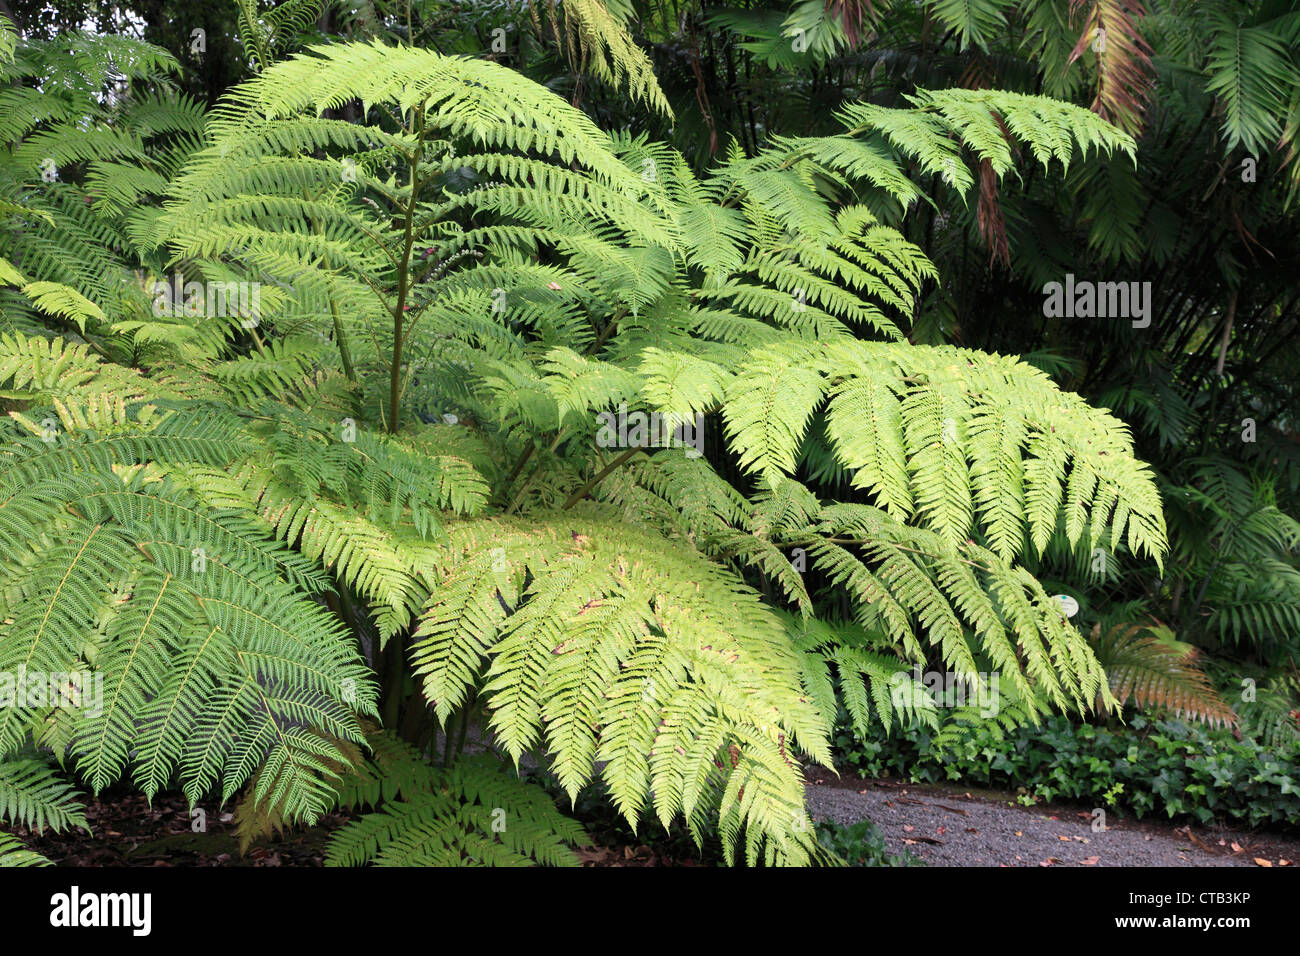 Spain, Canary Islands, Tenerife, arboreal fern, sphaeropteris cooperi, Stock Photo